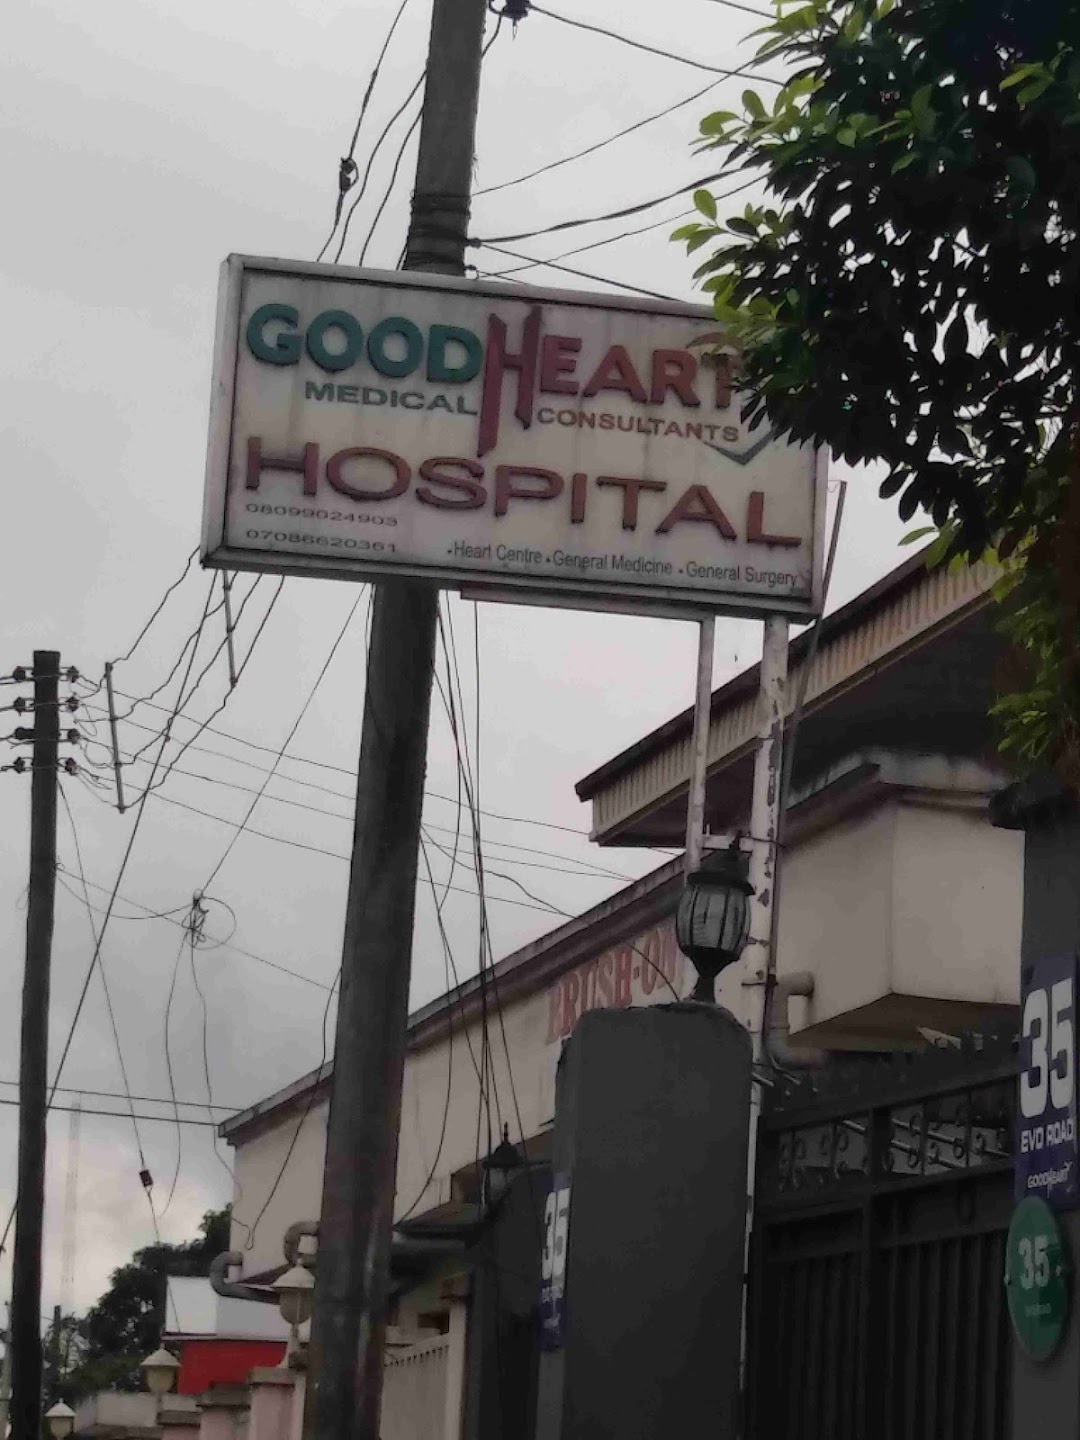 Good Heart Medical Consultants Hospital